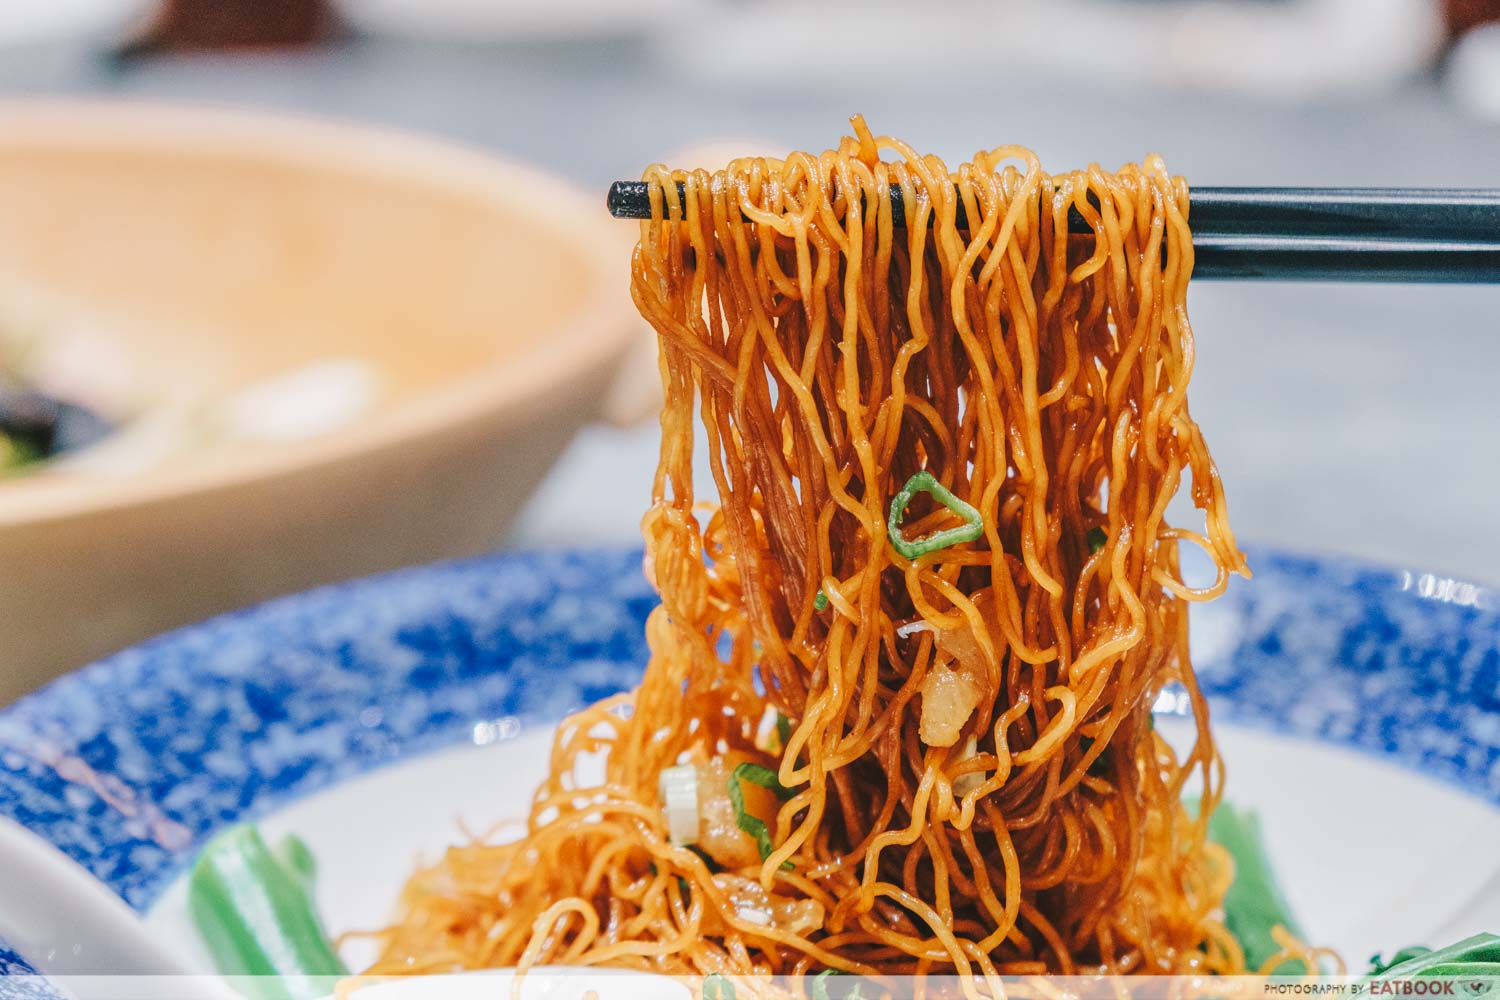 Shang Social - Jewel Bamboo noodles with dark sauce and lard